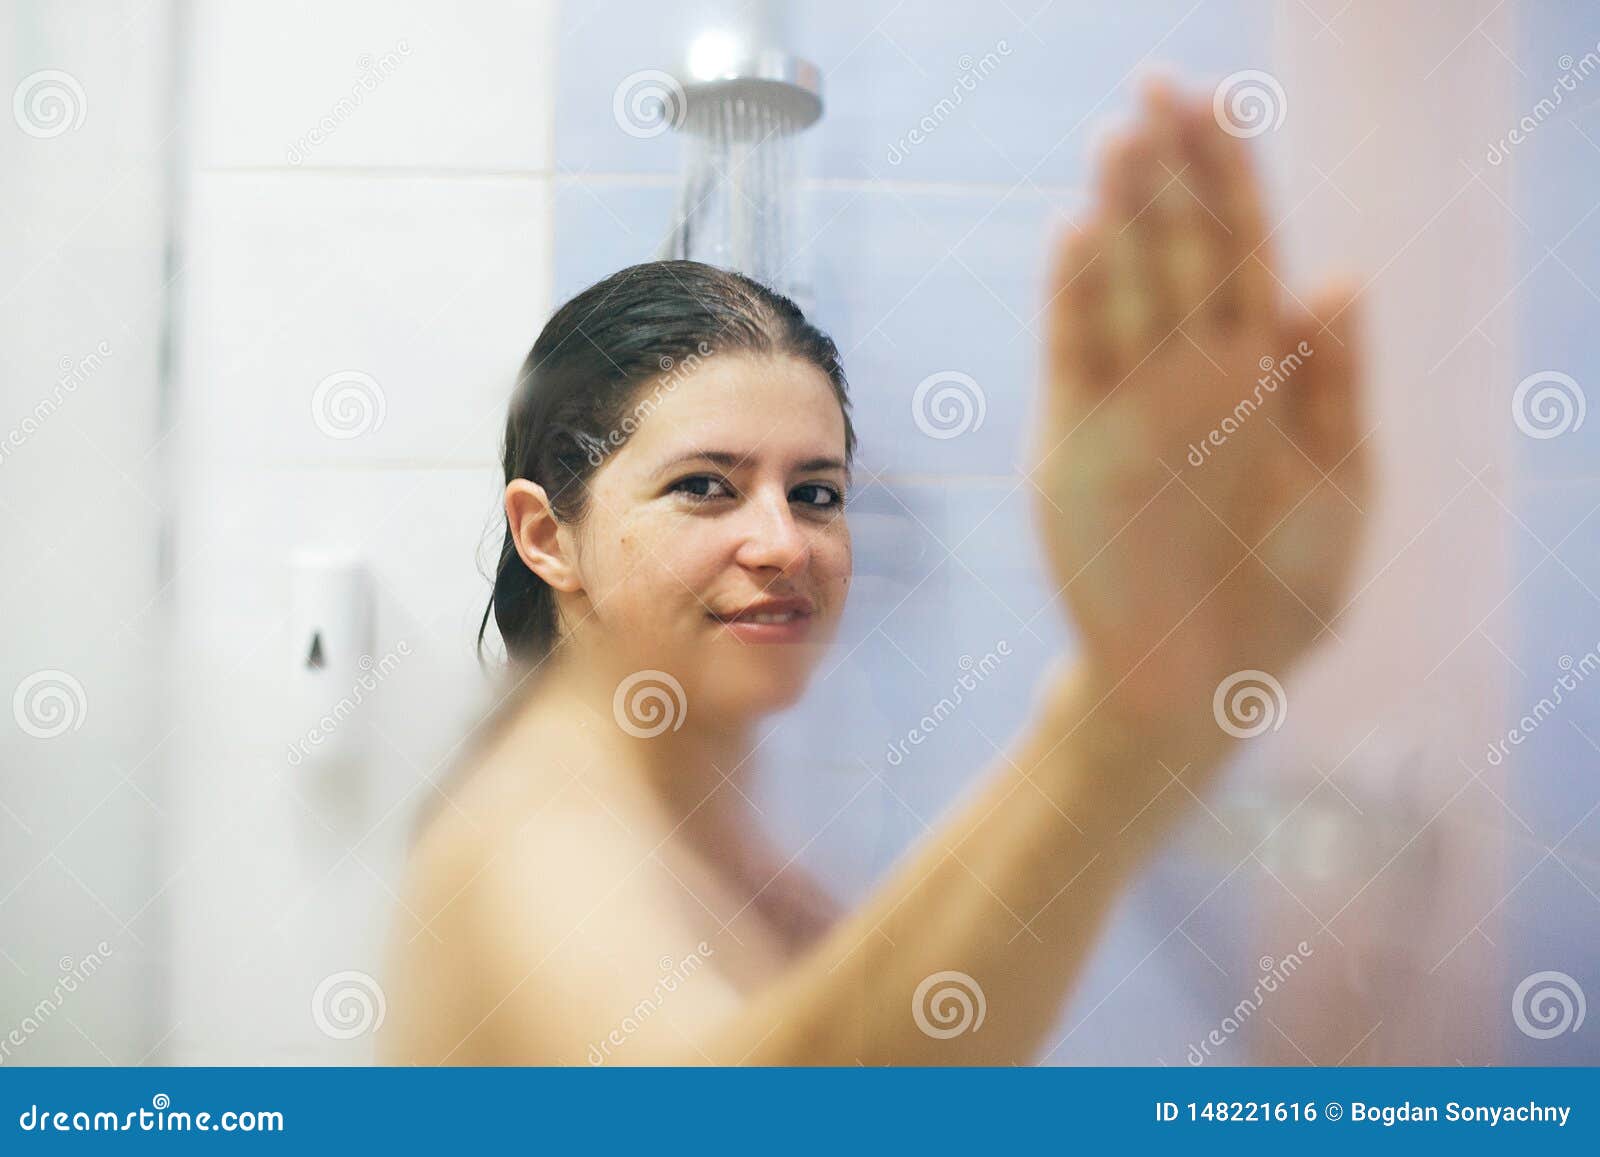 derrick leverett add photo hot girls in the shower